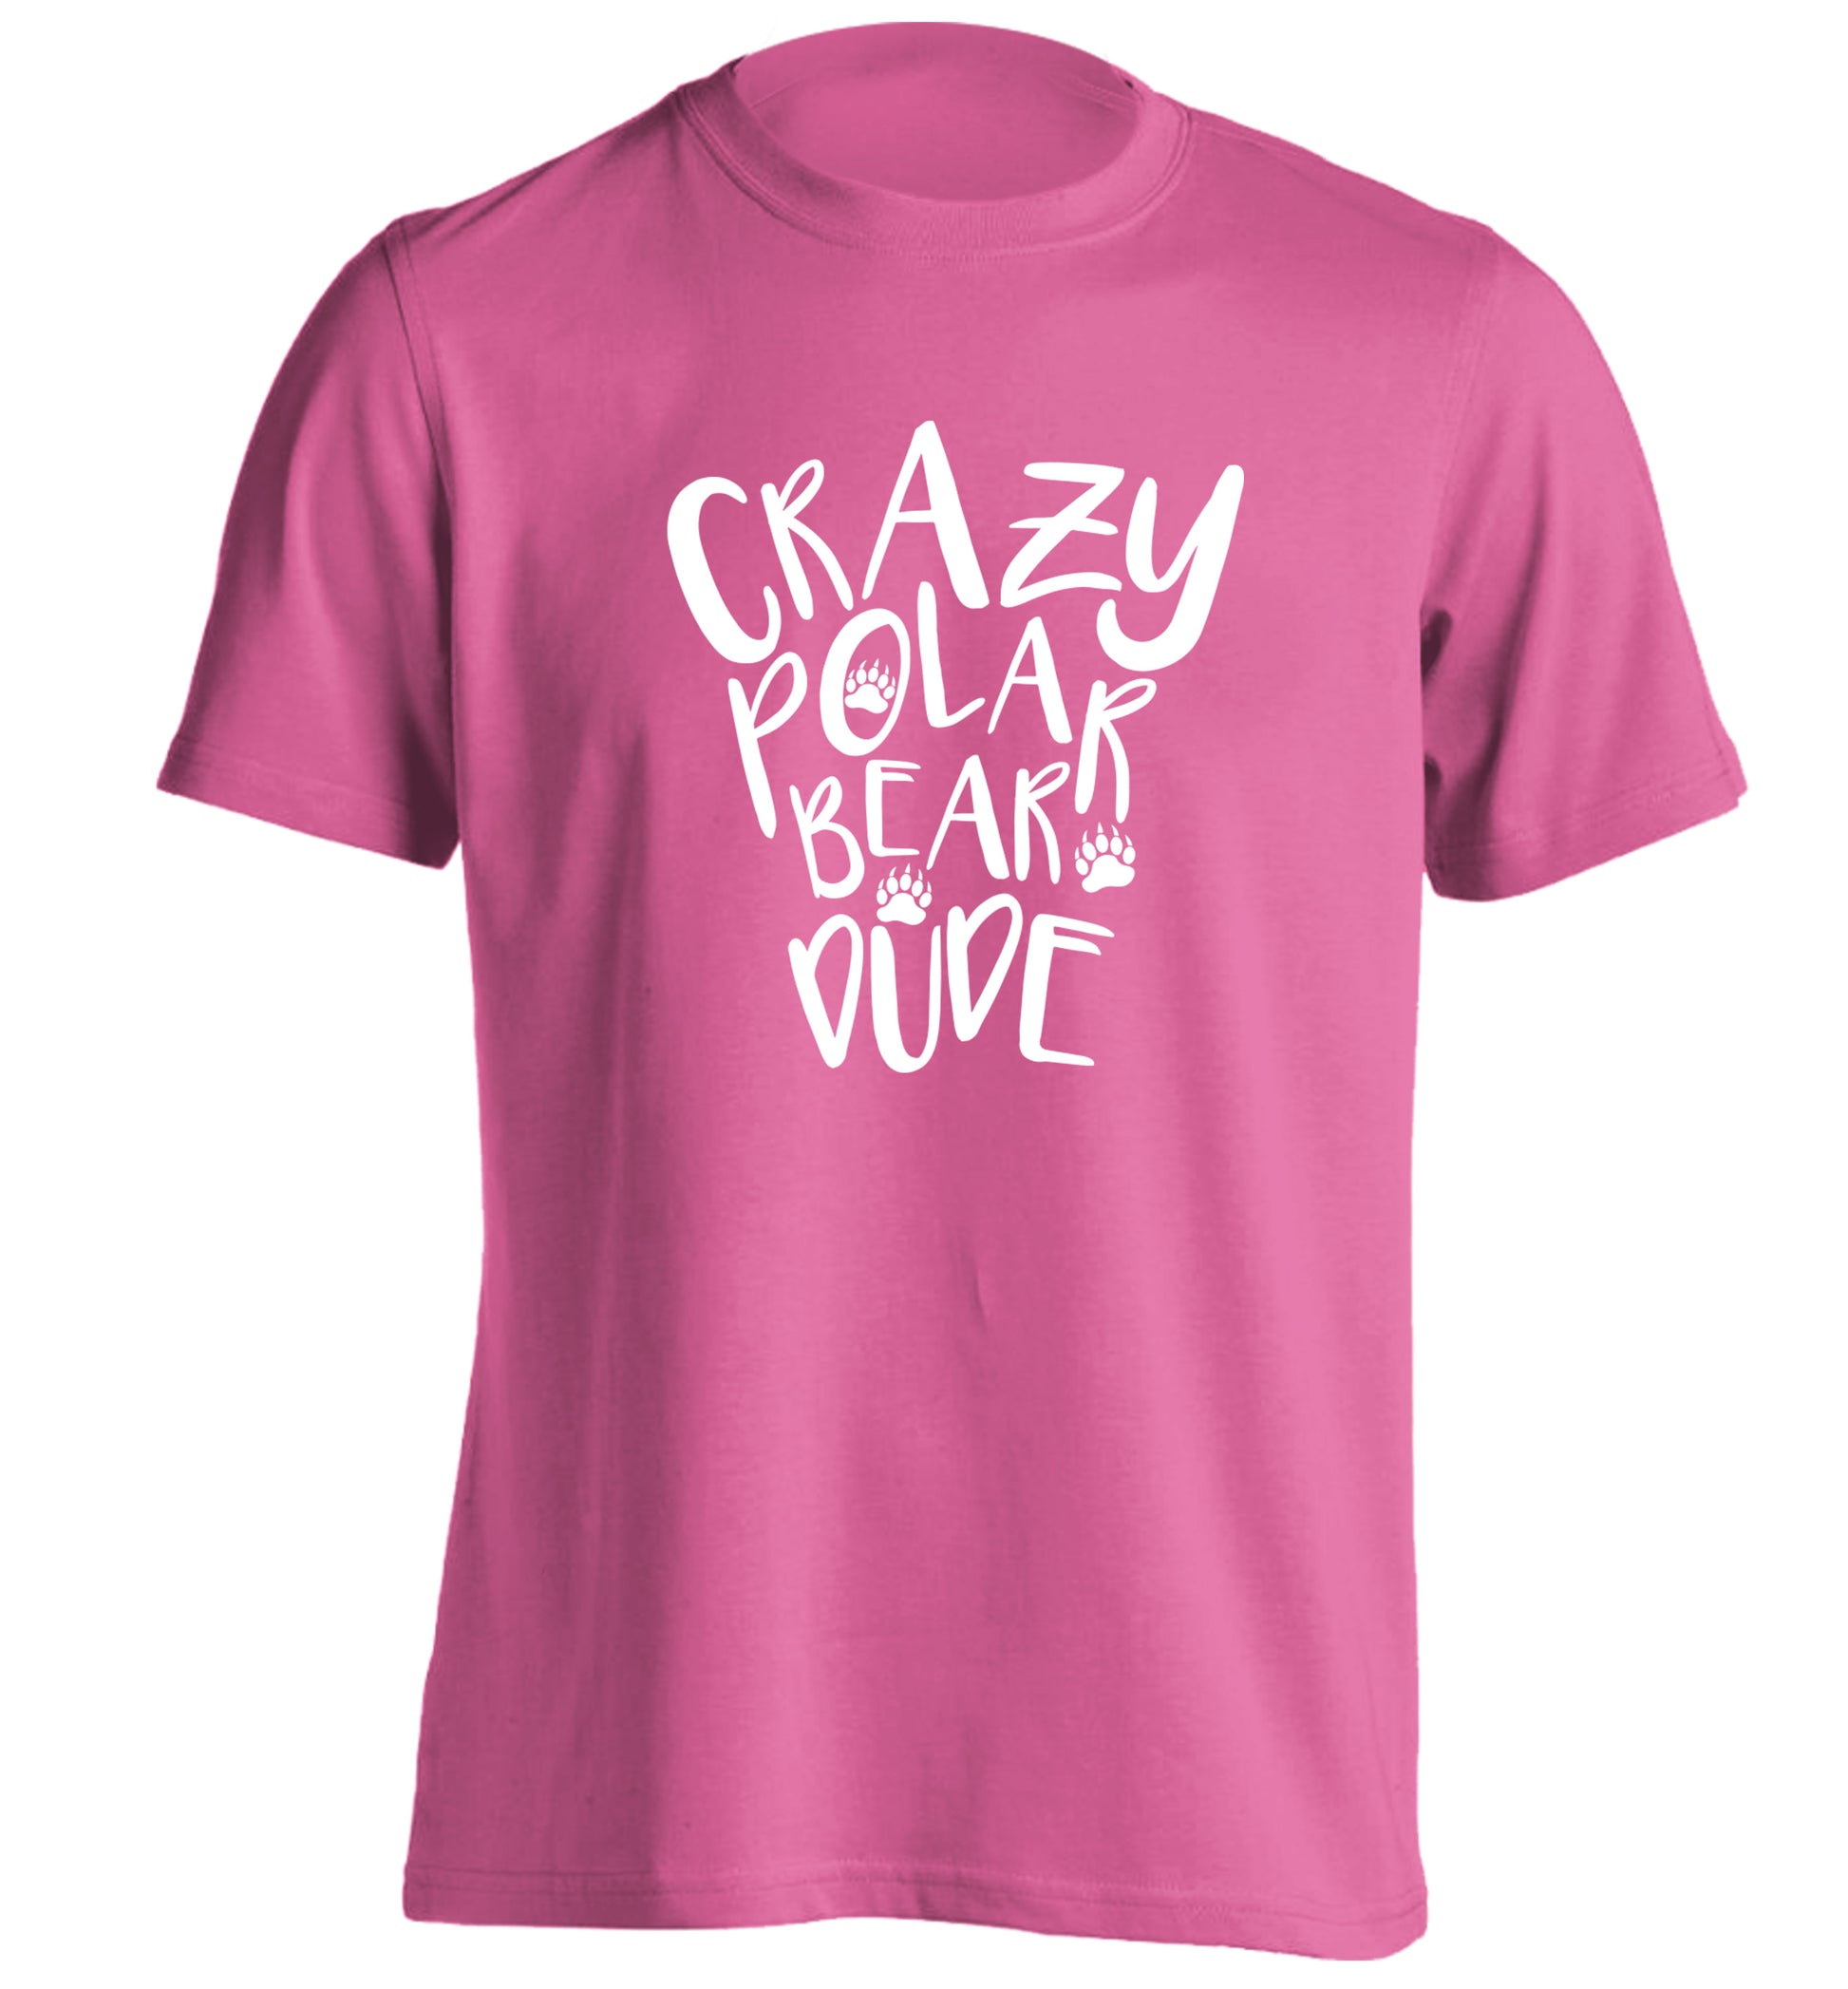 Crazy polar bear dude adults unisex pink Tshirt 2XL